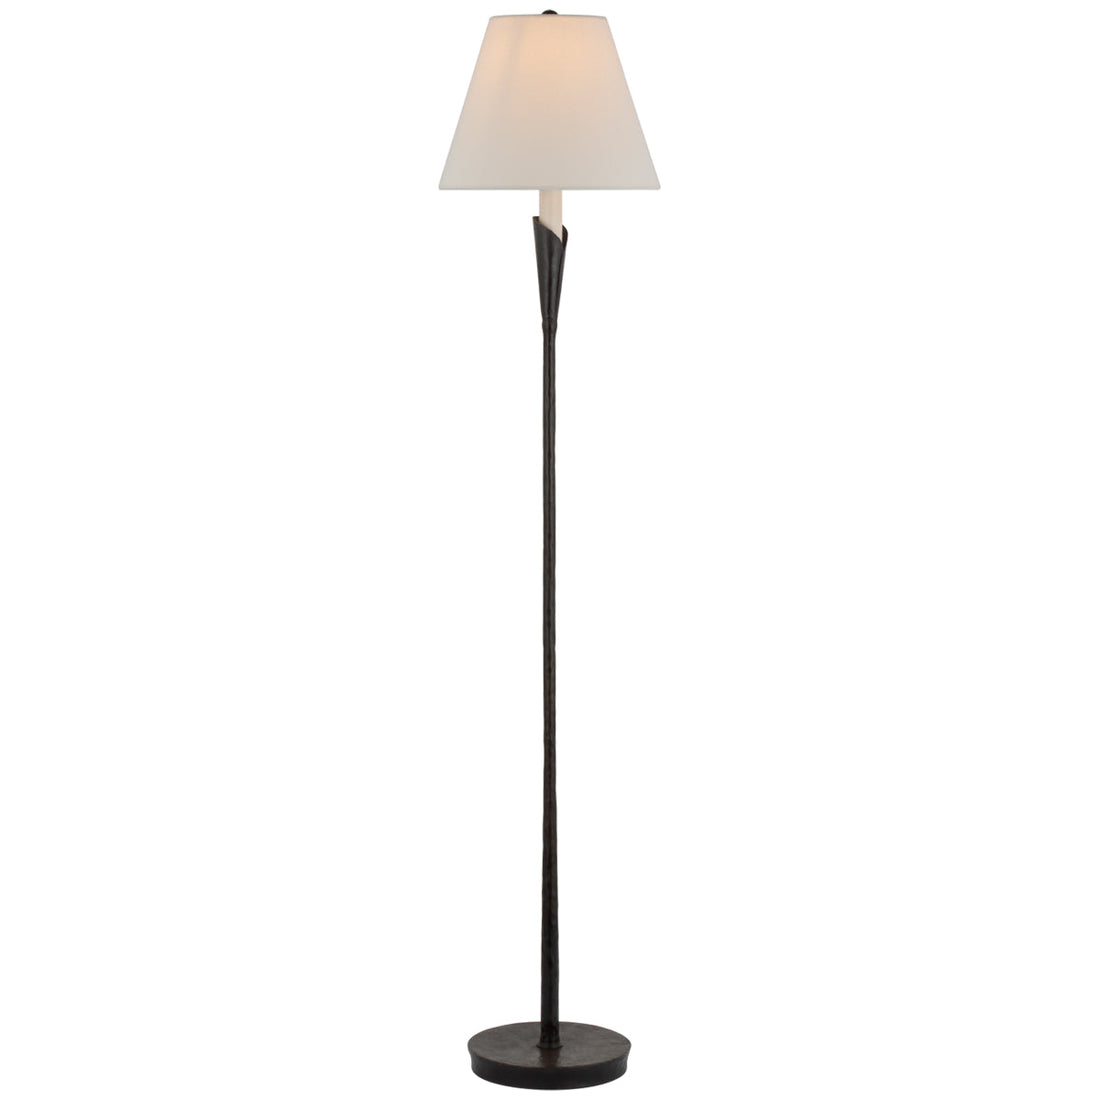 Visual Comfort Aiden Accent Floor Lamp